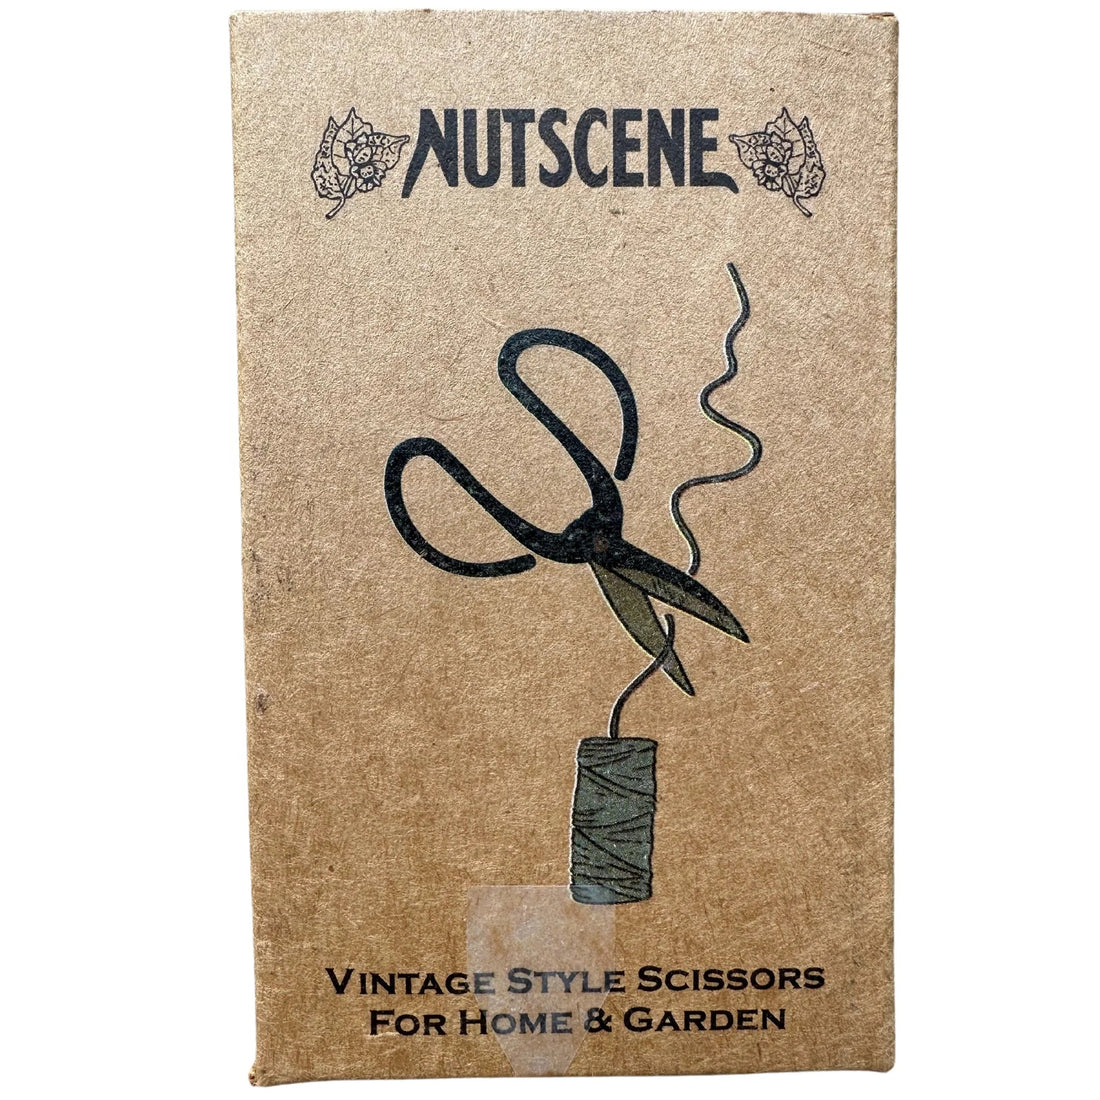 Nutscene Vintage Scissors - The Flower Crate